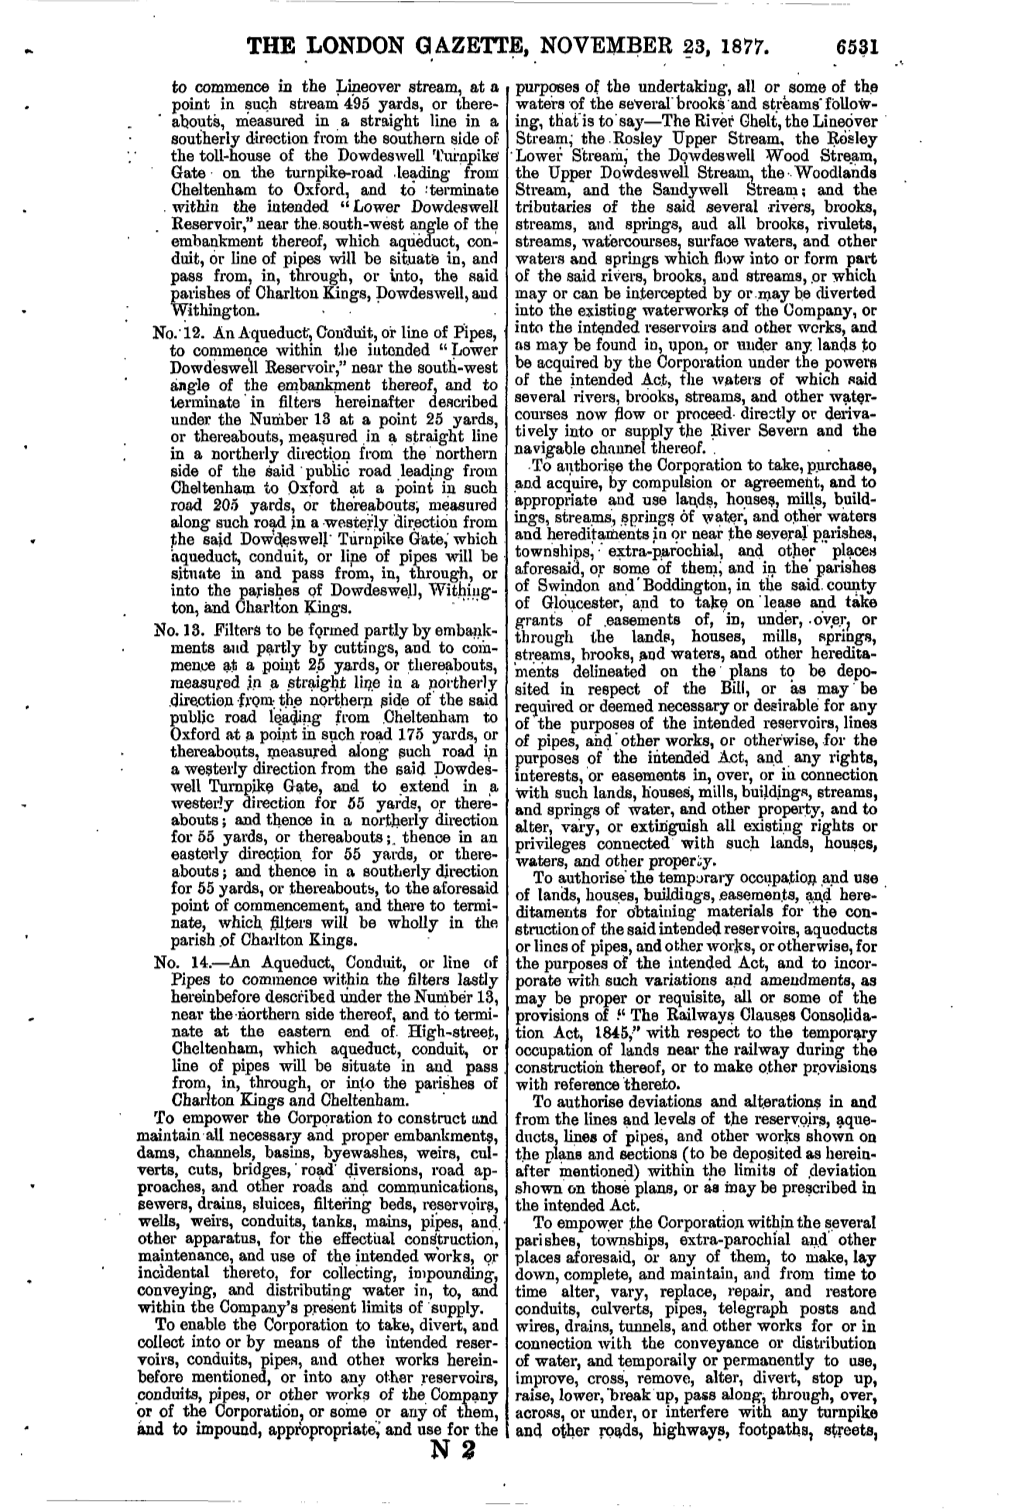 The London Gazette, November 23, 1877. 6531